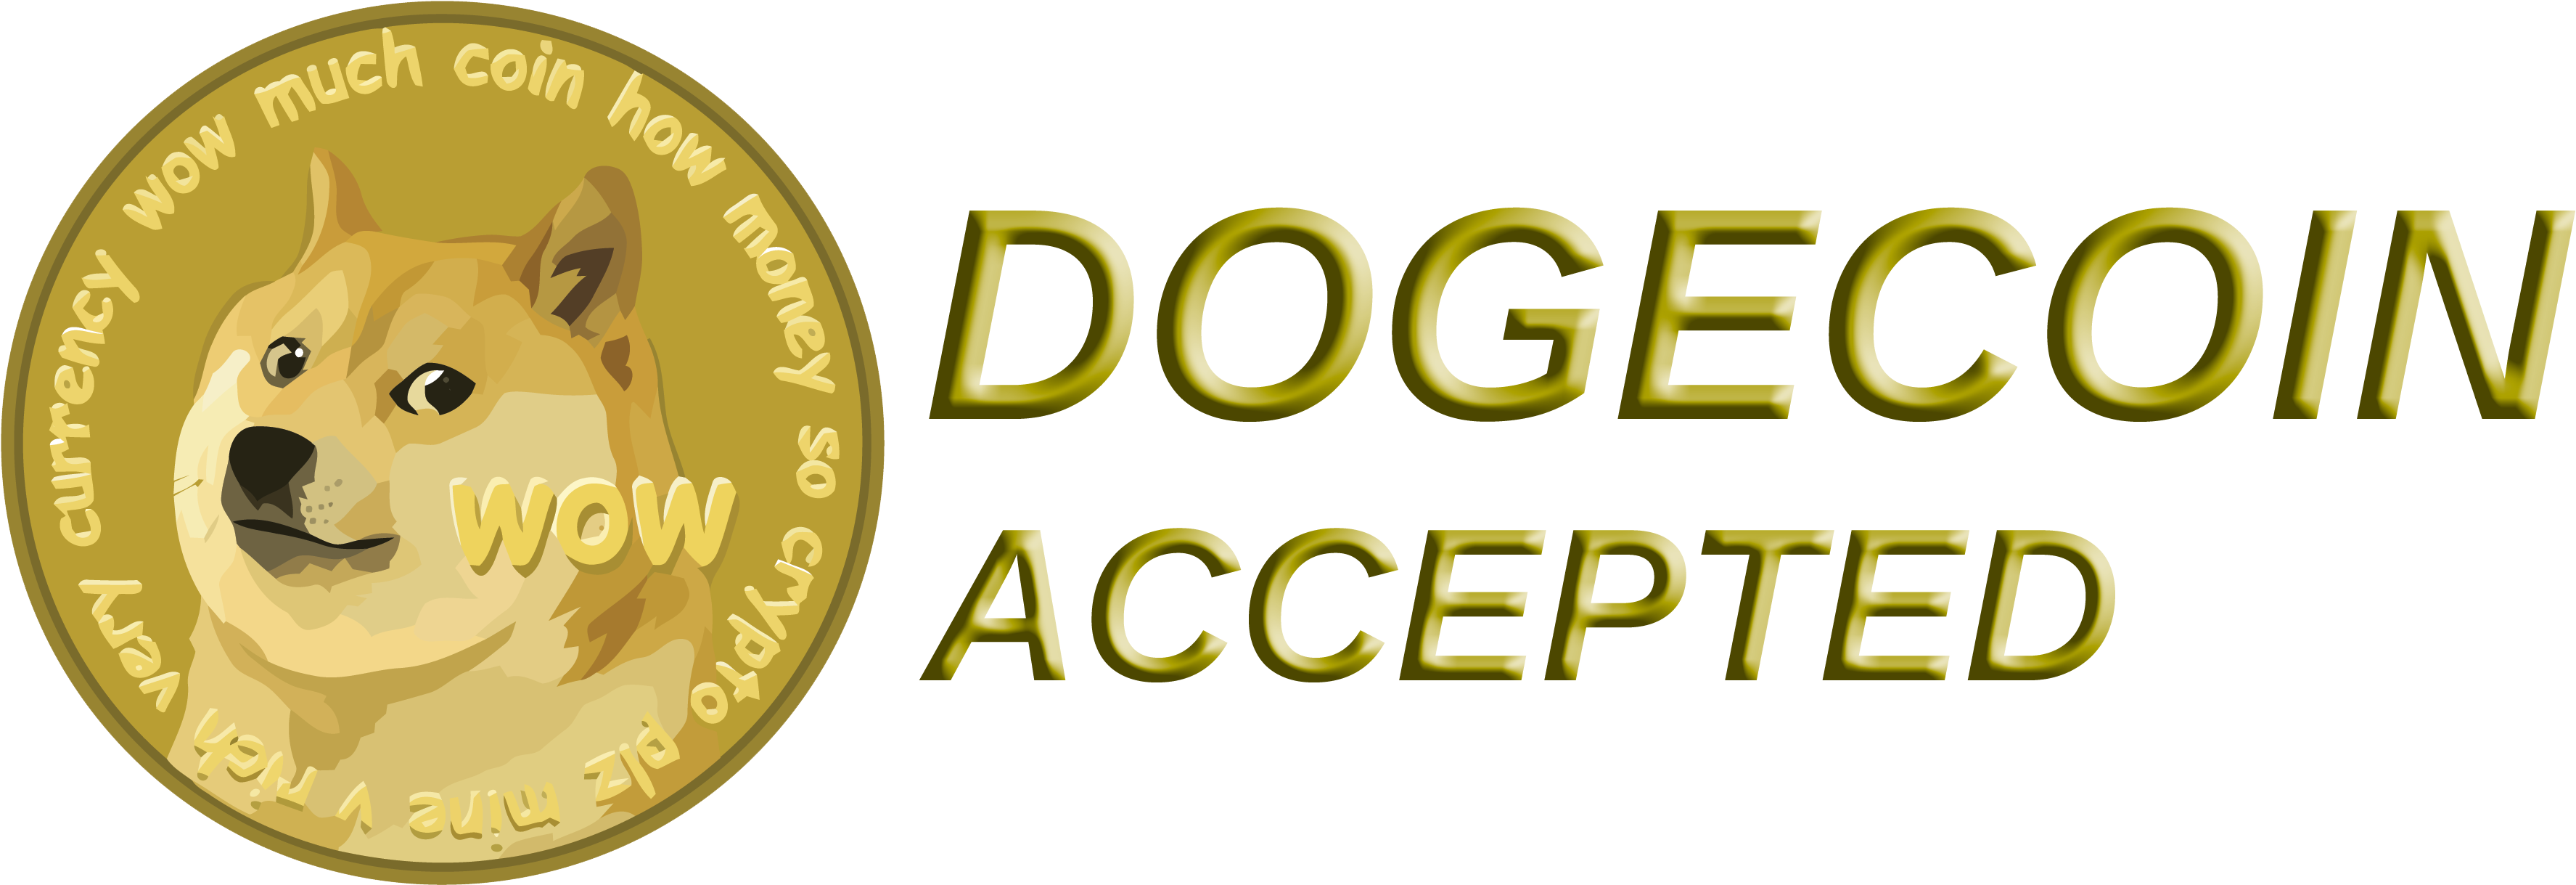 DogeCoin aceptada Pago PNG imagen Transparente